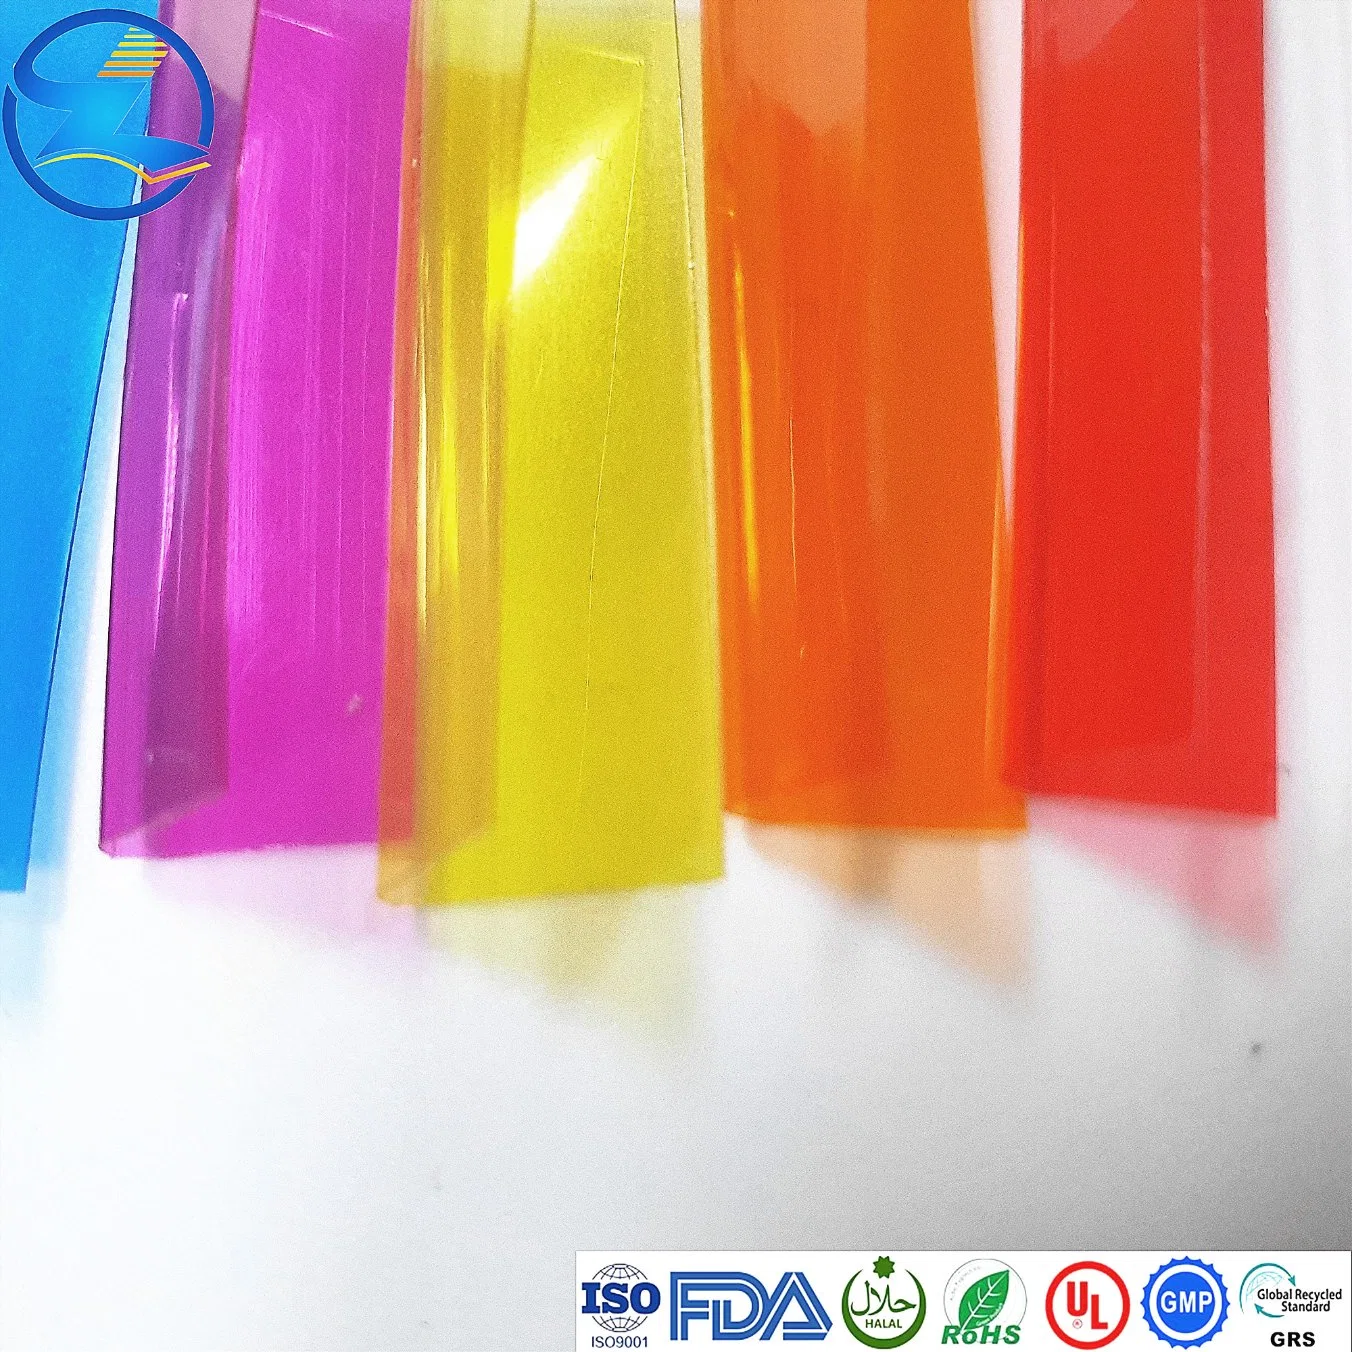 APET/Pet Film Sheet for Thermoforming and Printing...Anti-Scratch Pet (polyethylene terephthalate) Rigid Sheet Material